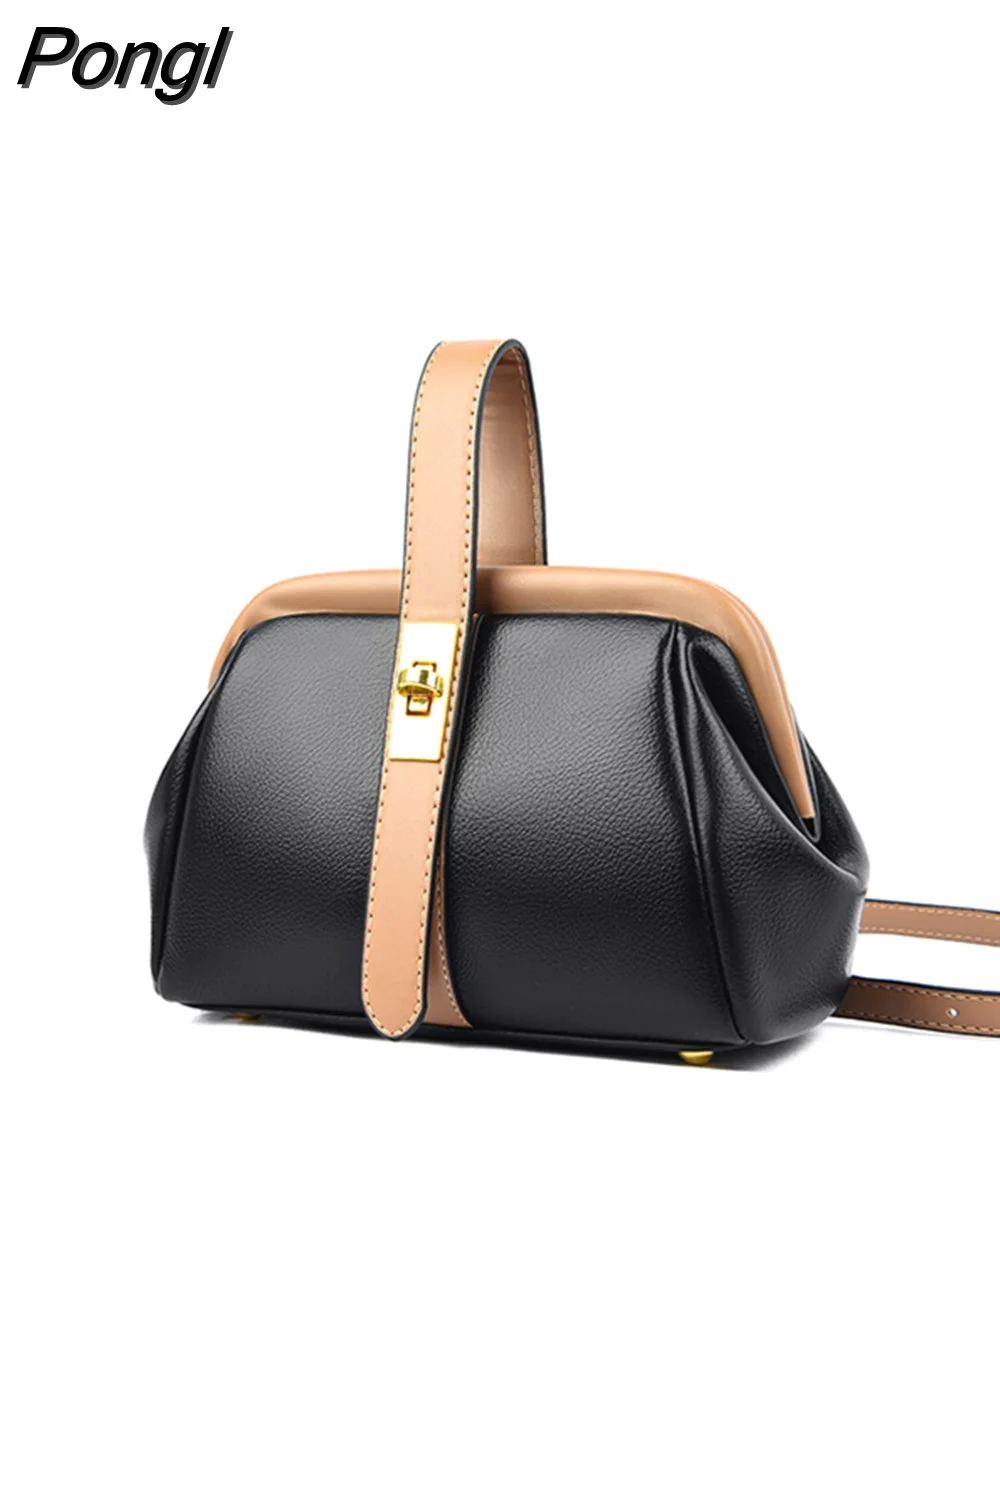 Pongl Women Bag Fashion Lady Handbags Luxury Trend Shoulder Bags Elegant Versatile Women's Bag Hot Crossbody Classic Brand Messenger